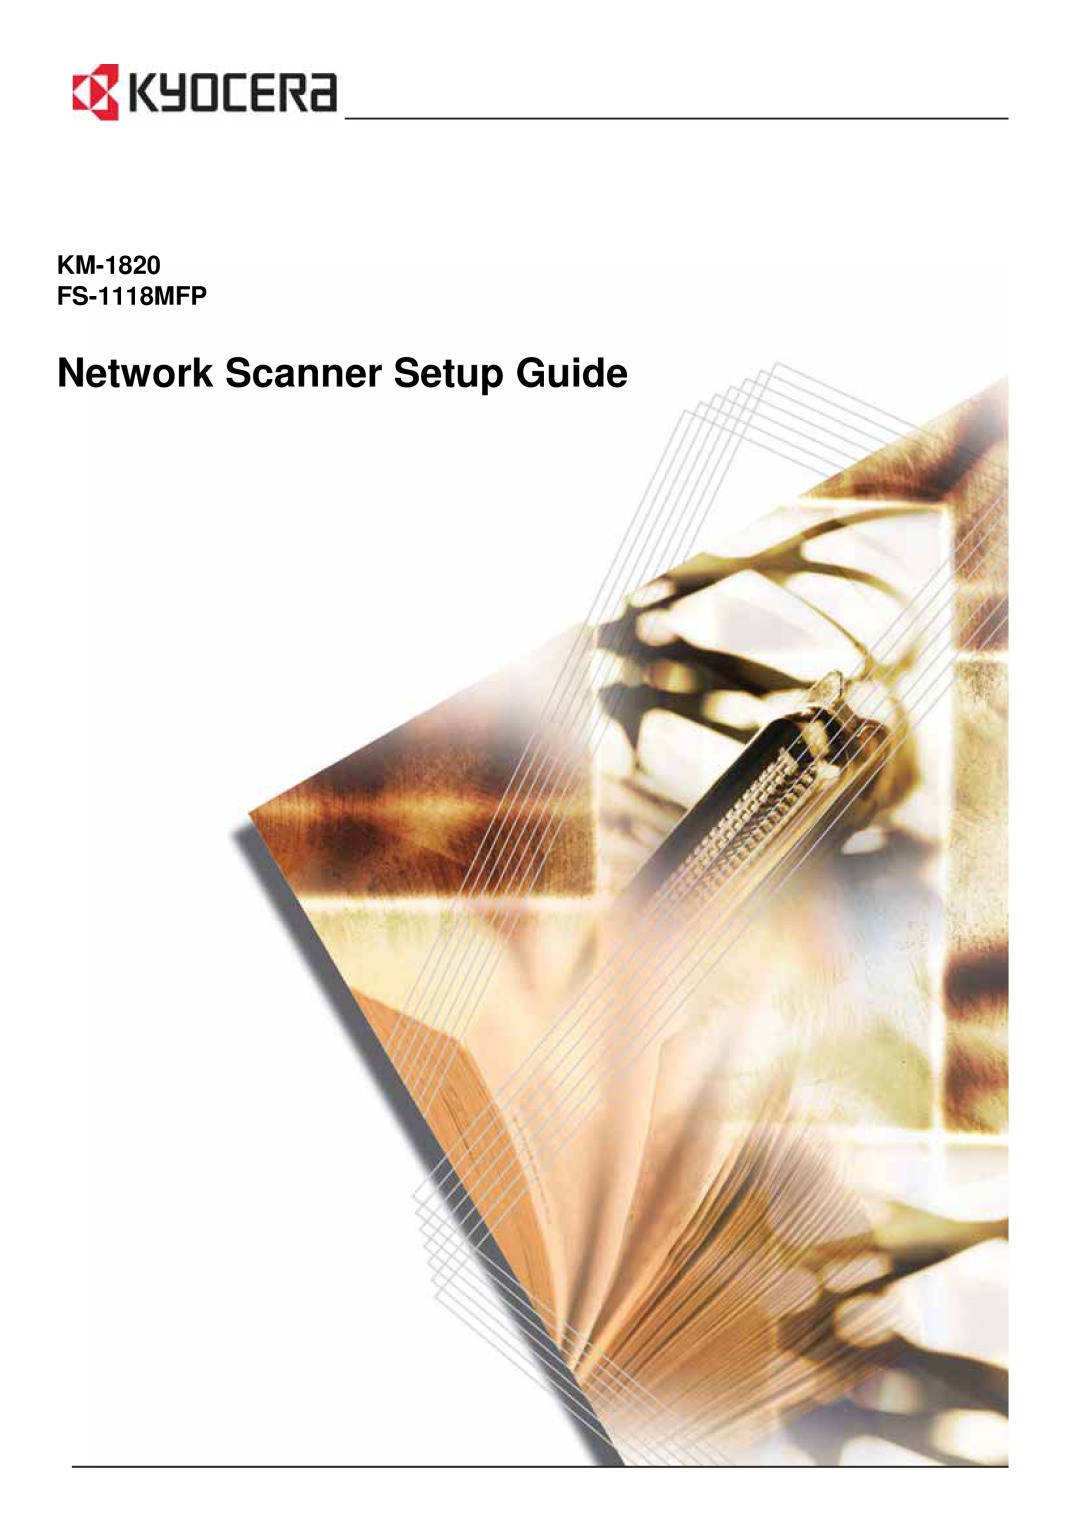 Kyocera setup guide Network Scanner Setup Guide, KM-1820 FS-1118MFP 